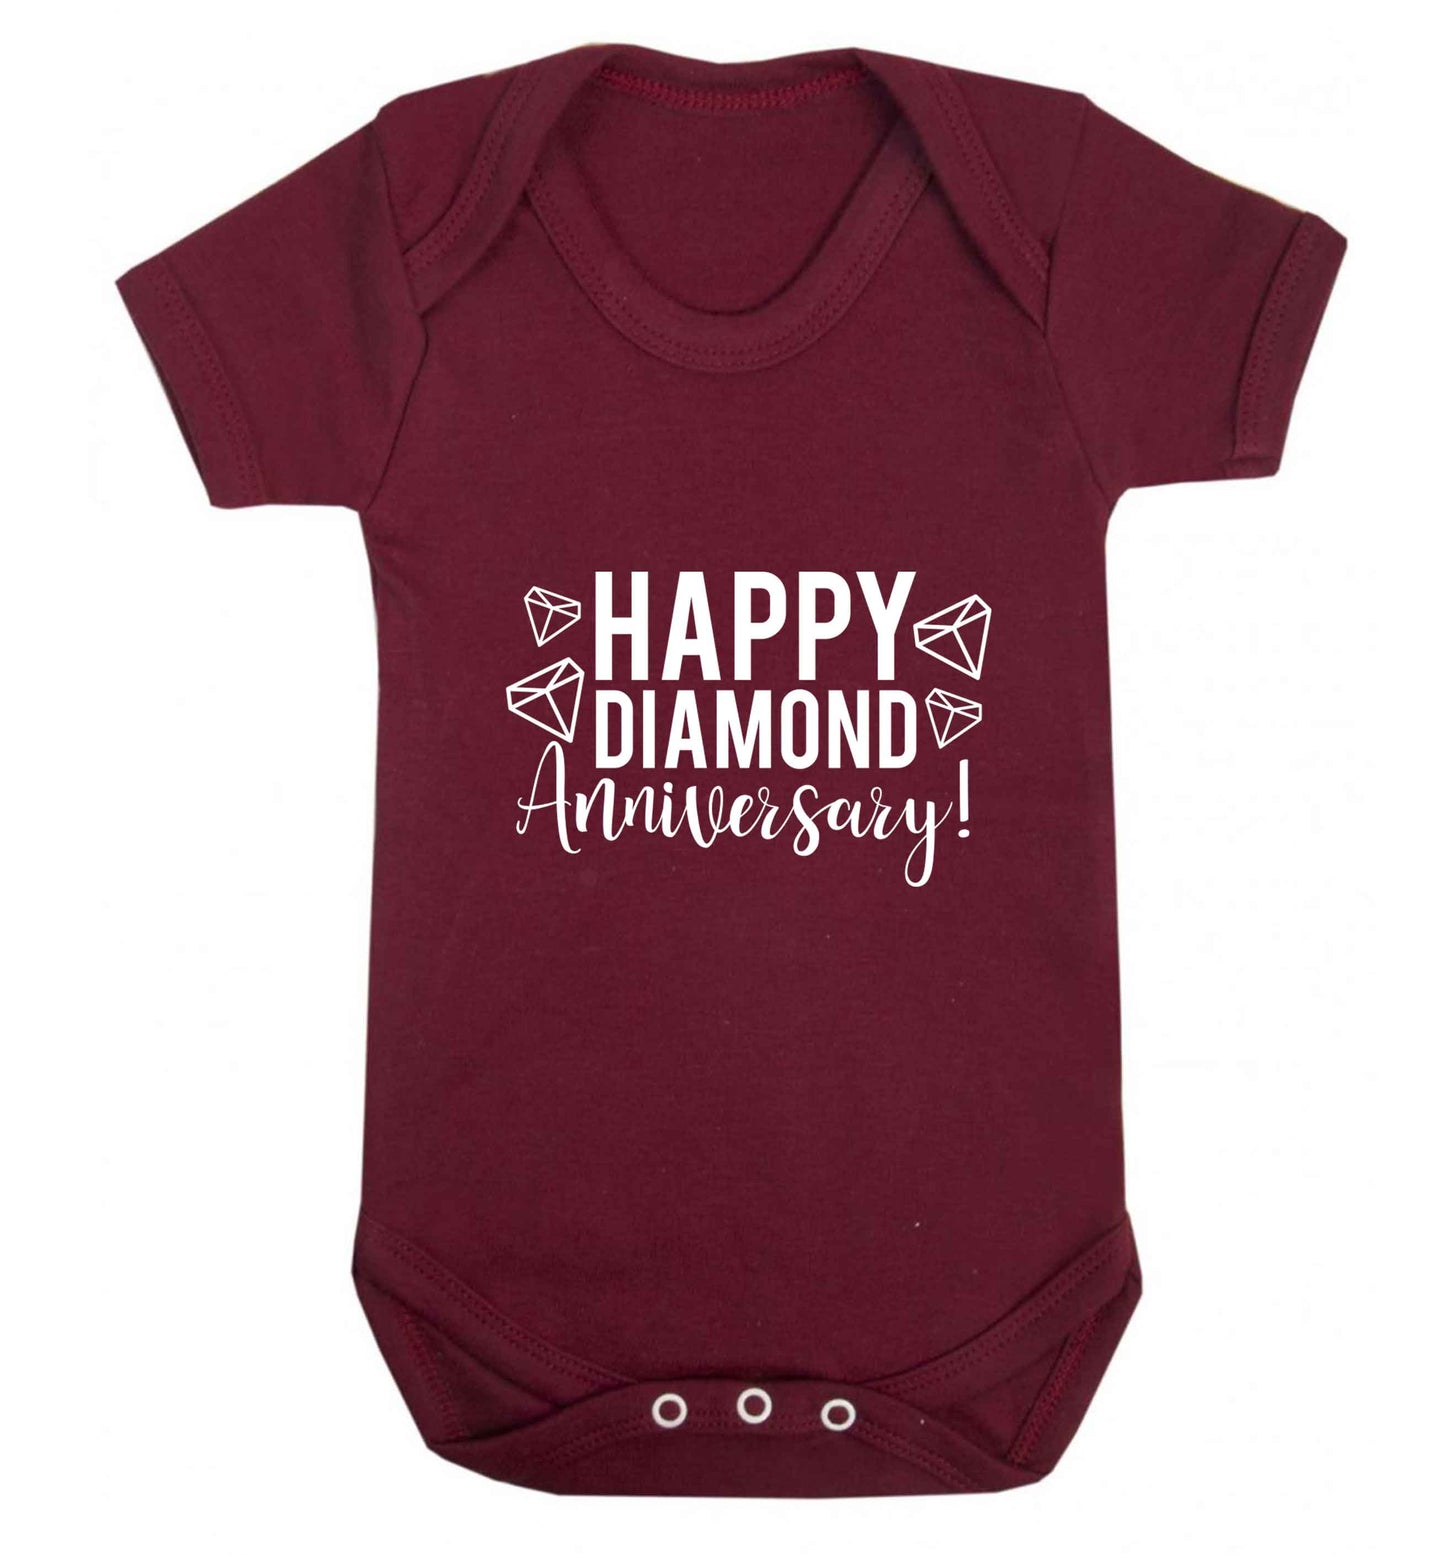 Happy diamond anniversary! baby vest maroon 18-24 months